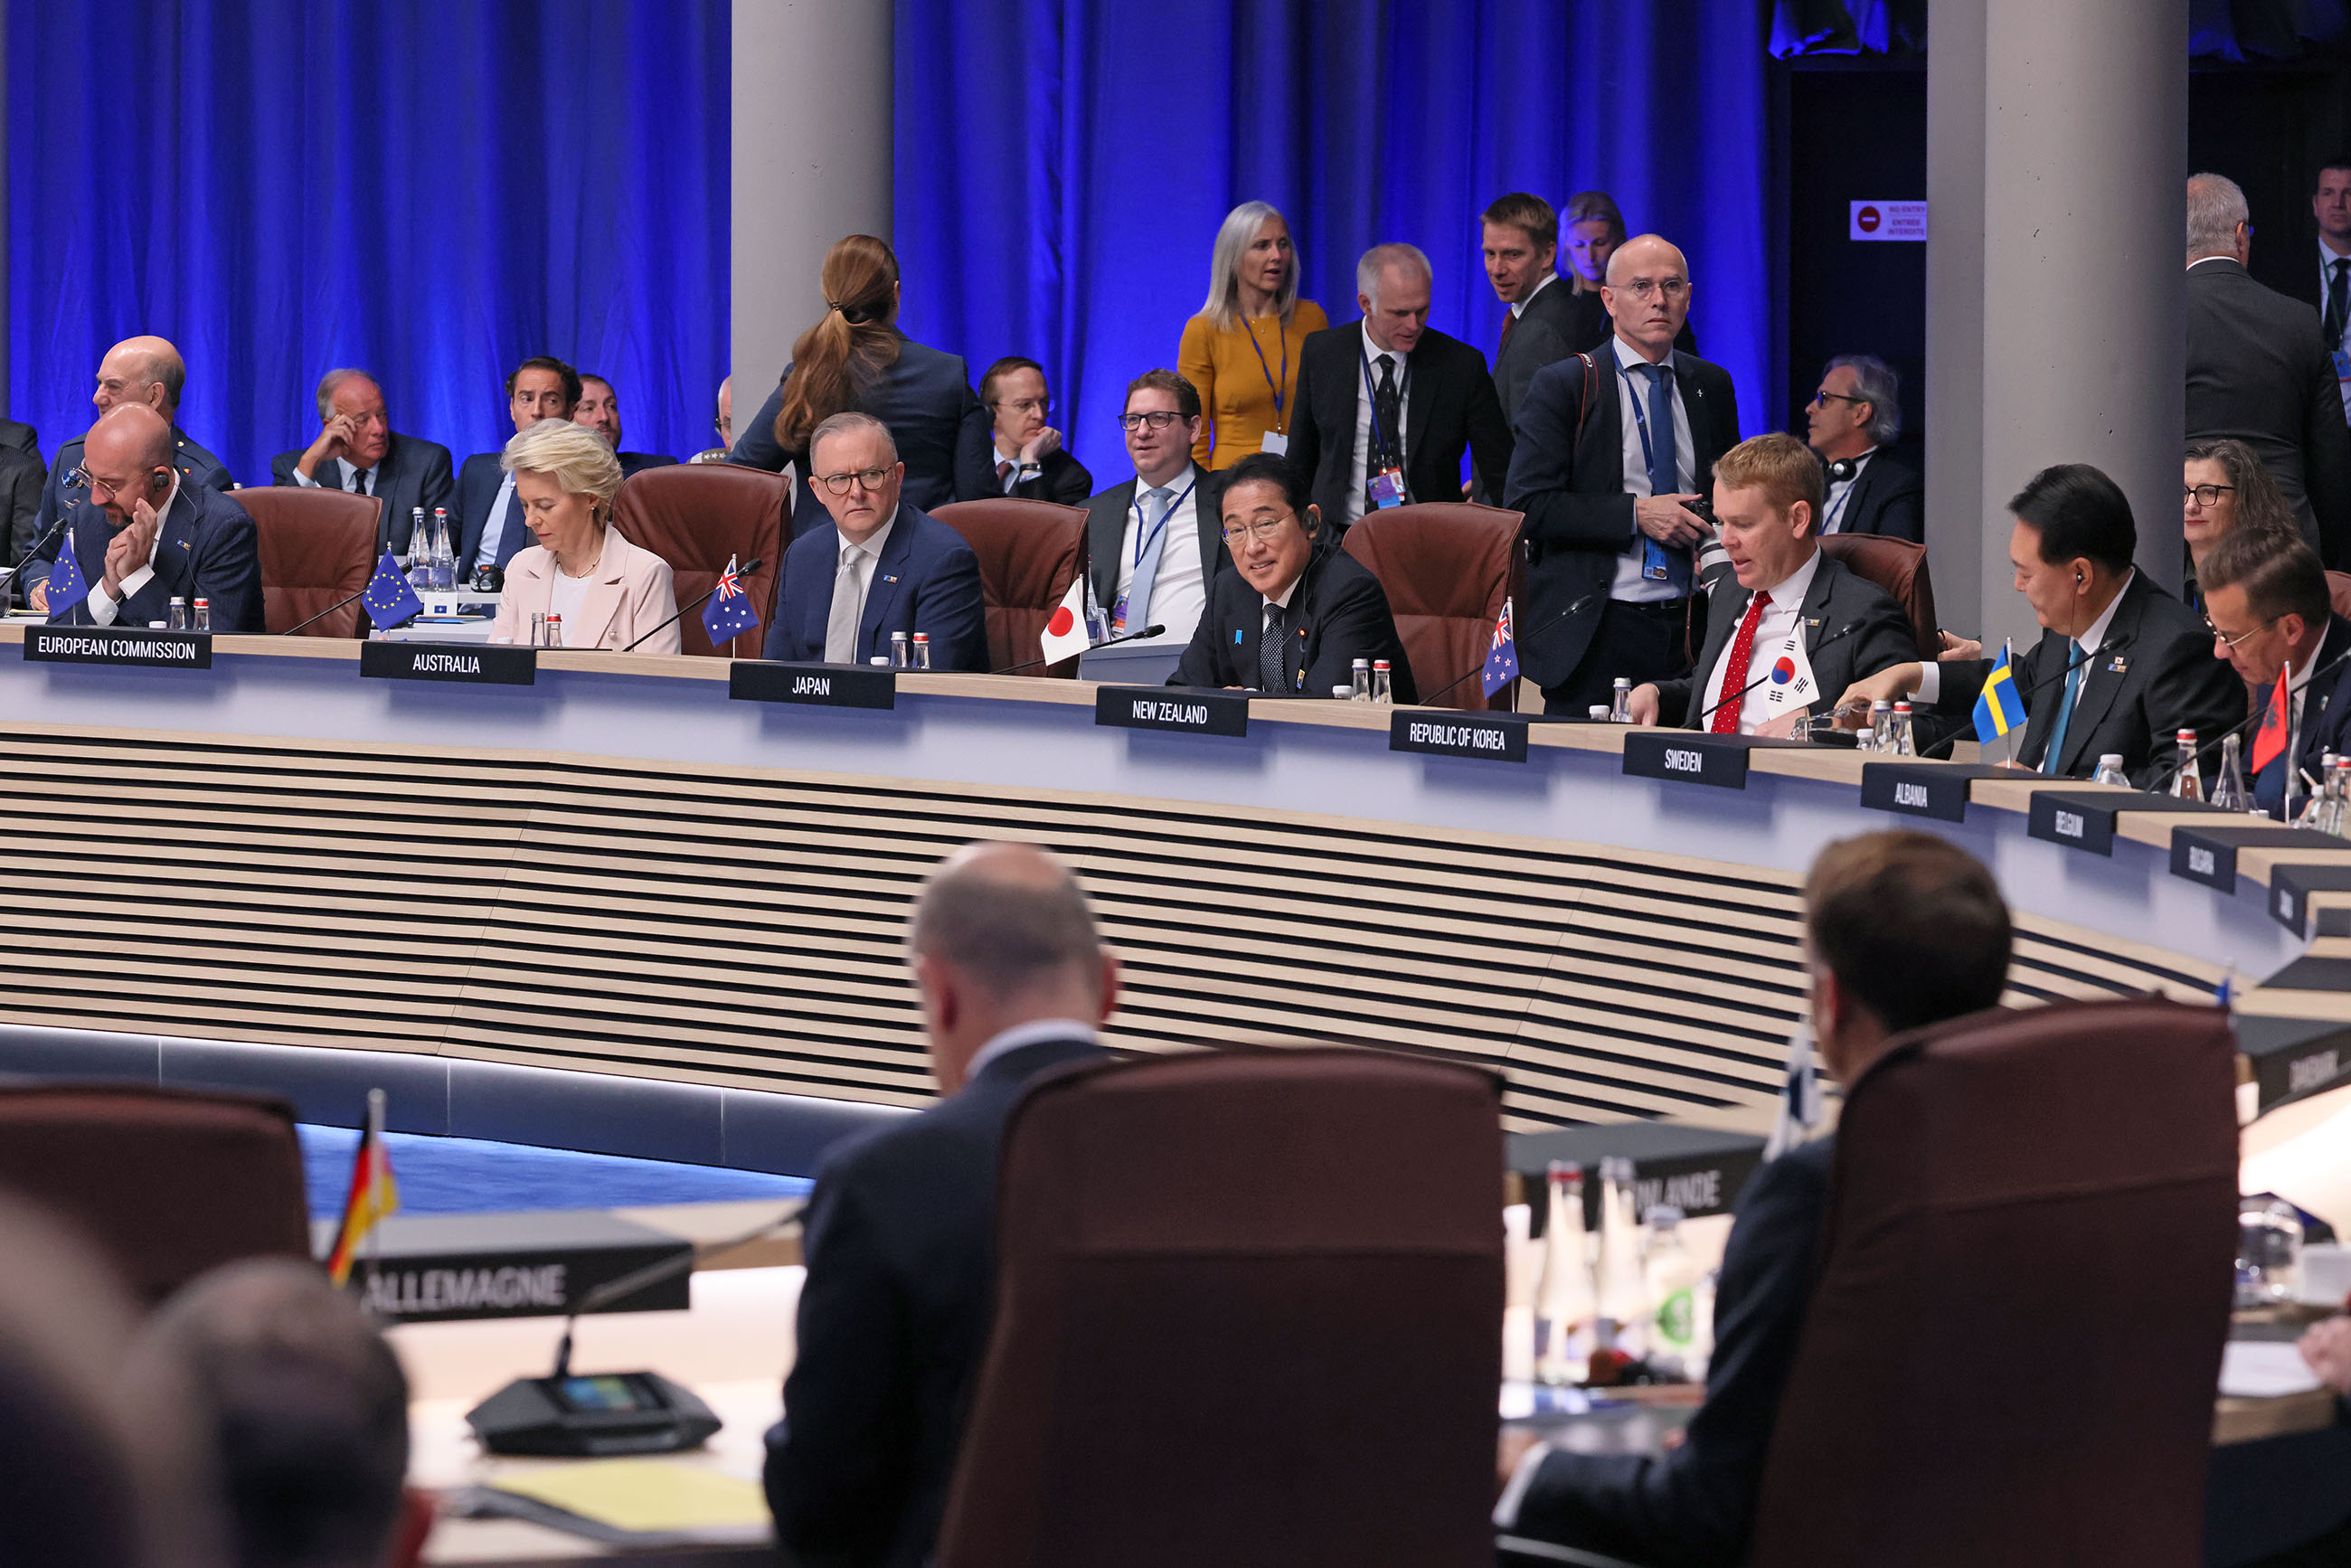 NATO Summit (Session 2) (1)